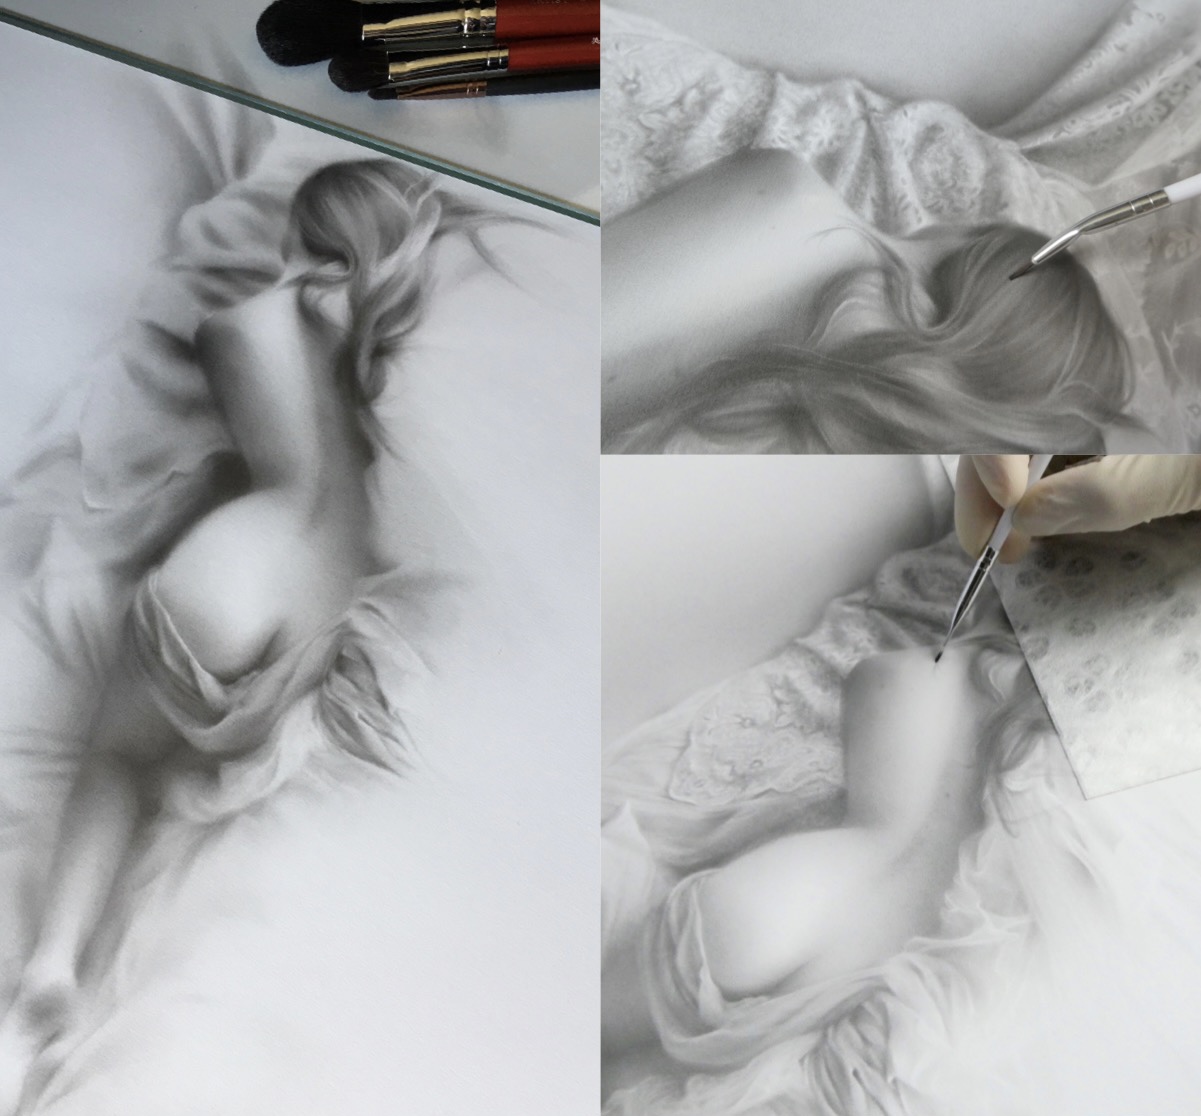 Graphite drawings - "Sleeping Beauty" process shots 